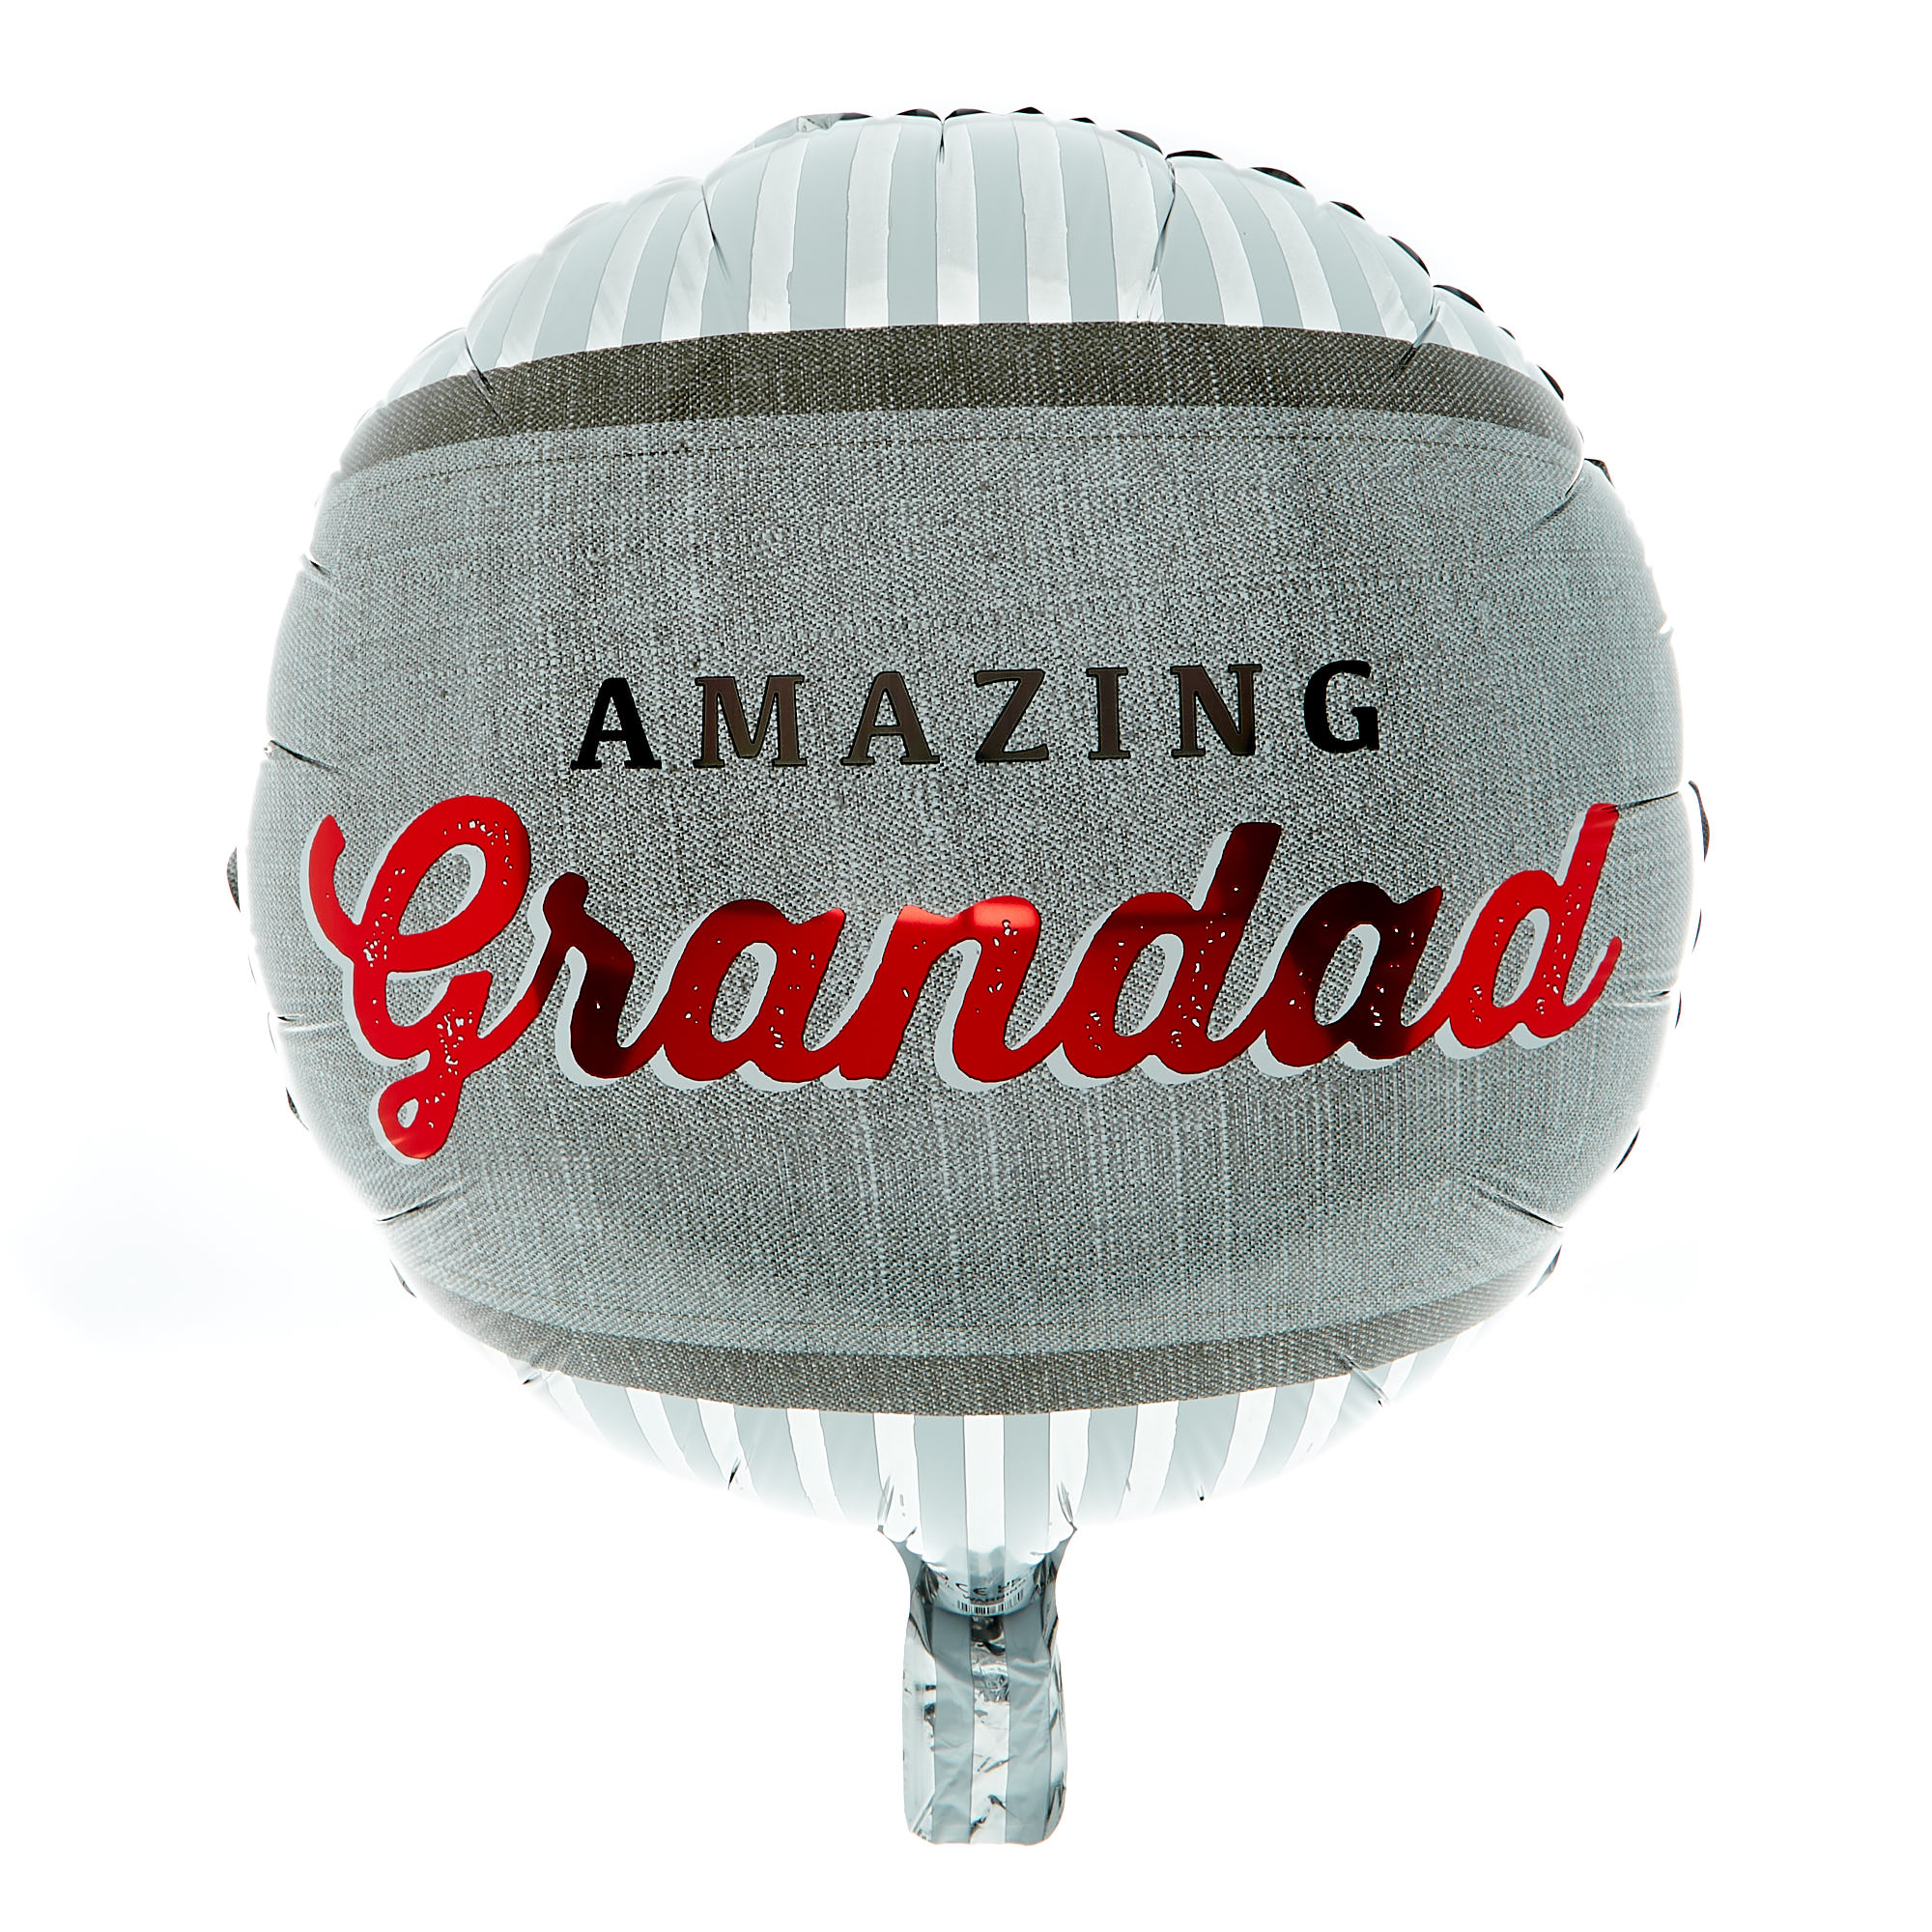 Amazing Grandad Balloon & Lindt Chocolate Bar - FREE GIFT CARD!